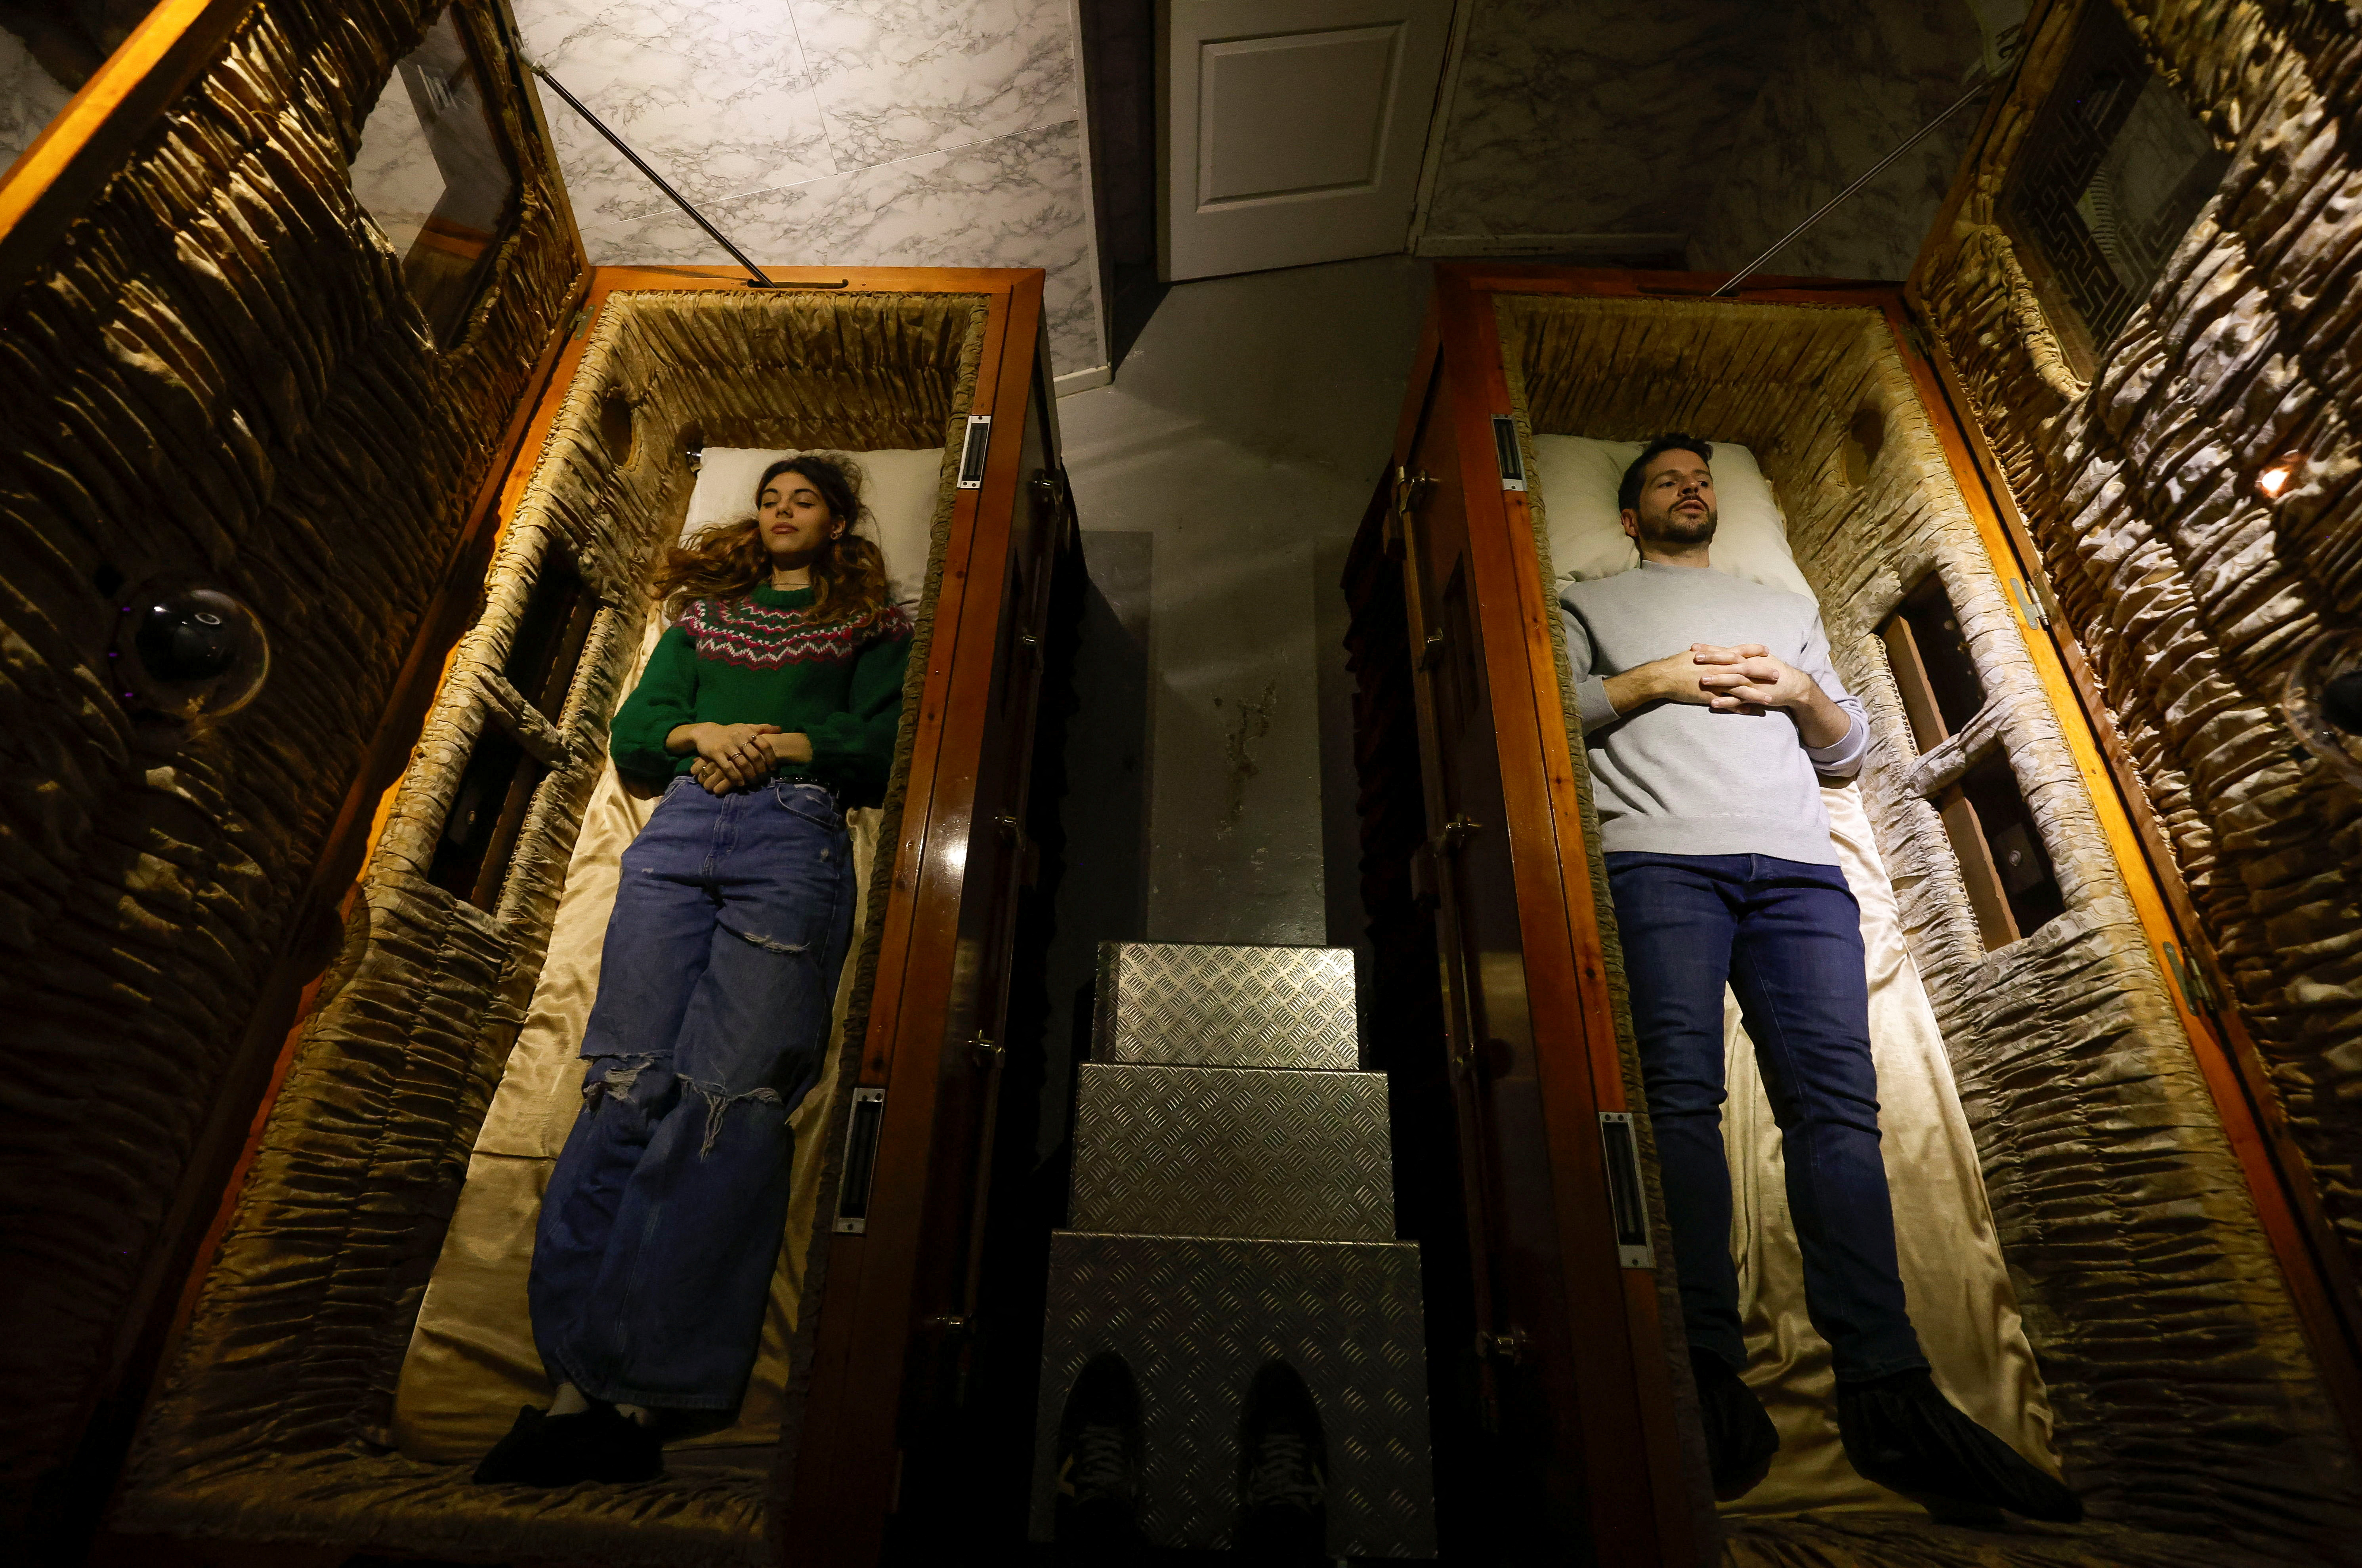 World's smallest escape room is a coffin